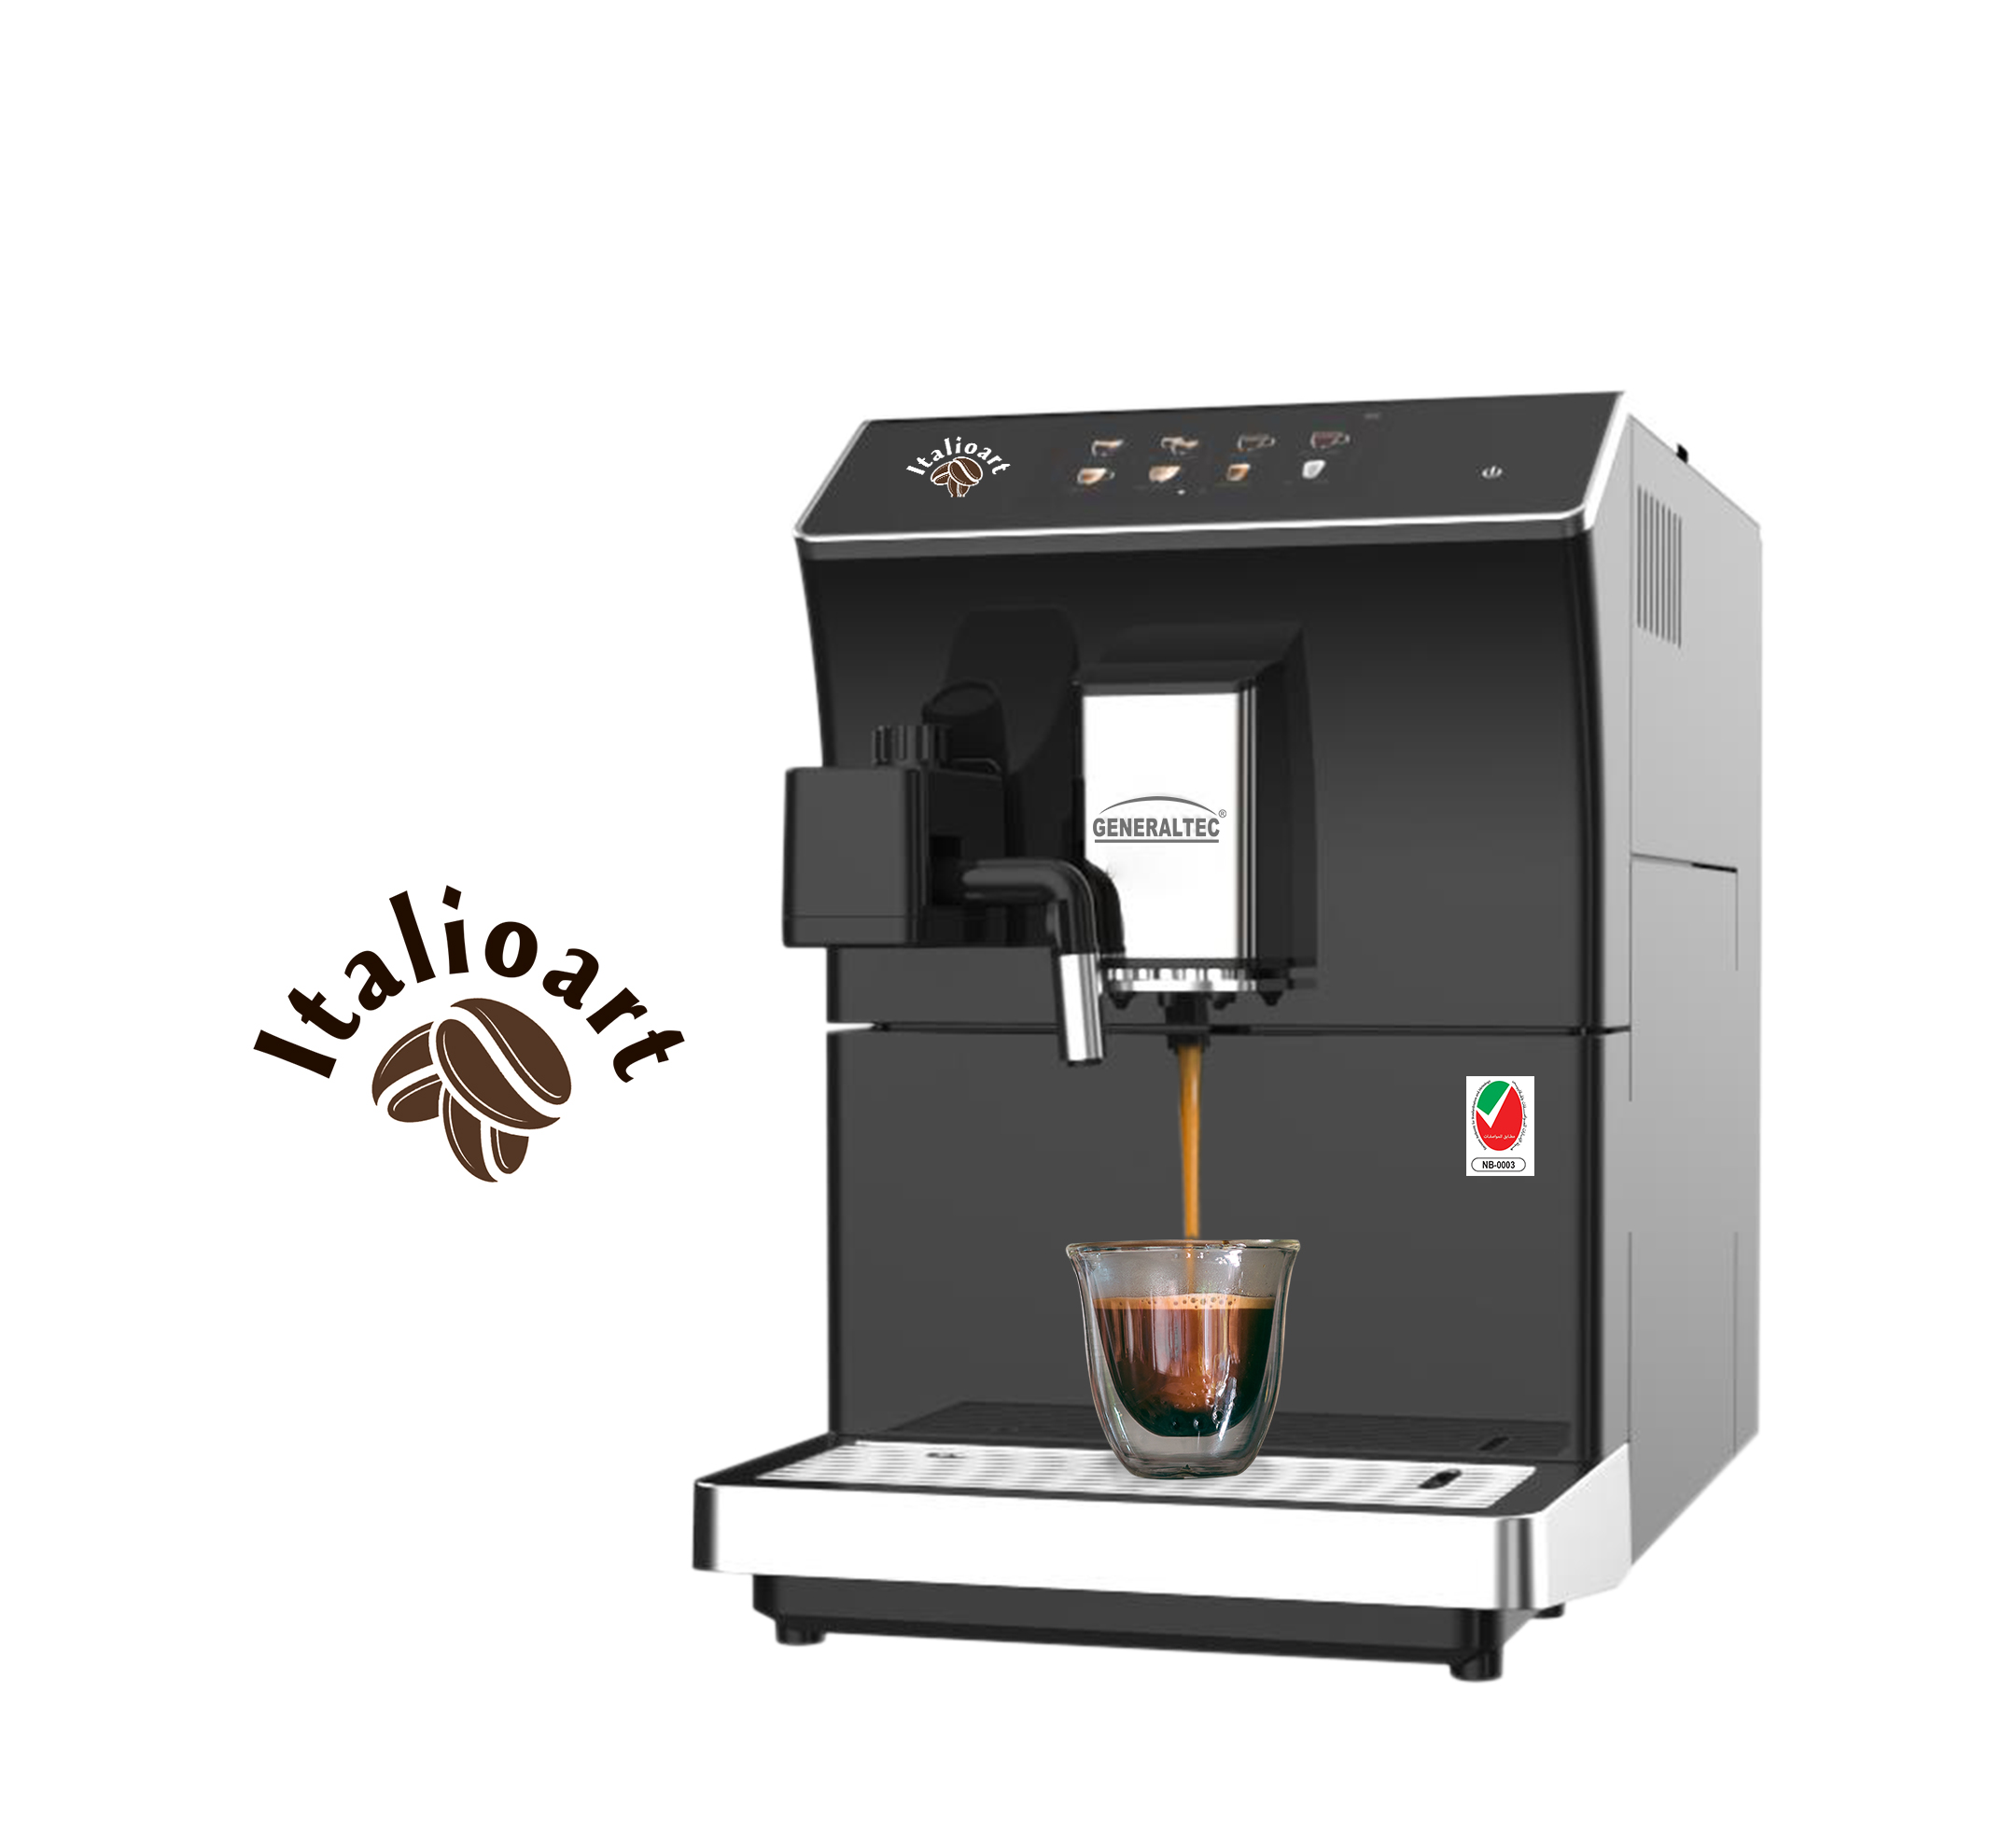 Generaltec Fully Automatic Coffee Machine Model No. GCM5000TC (Black)